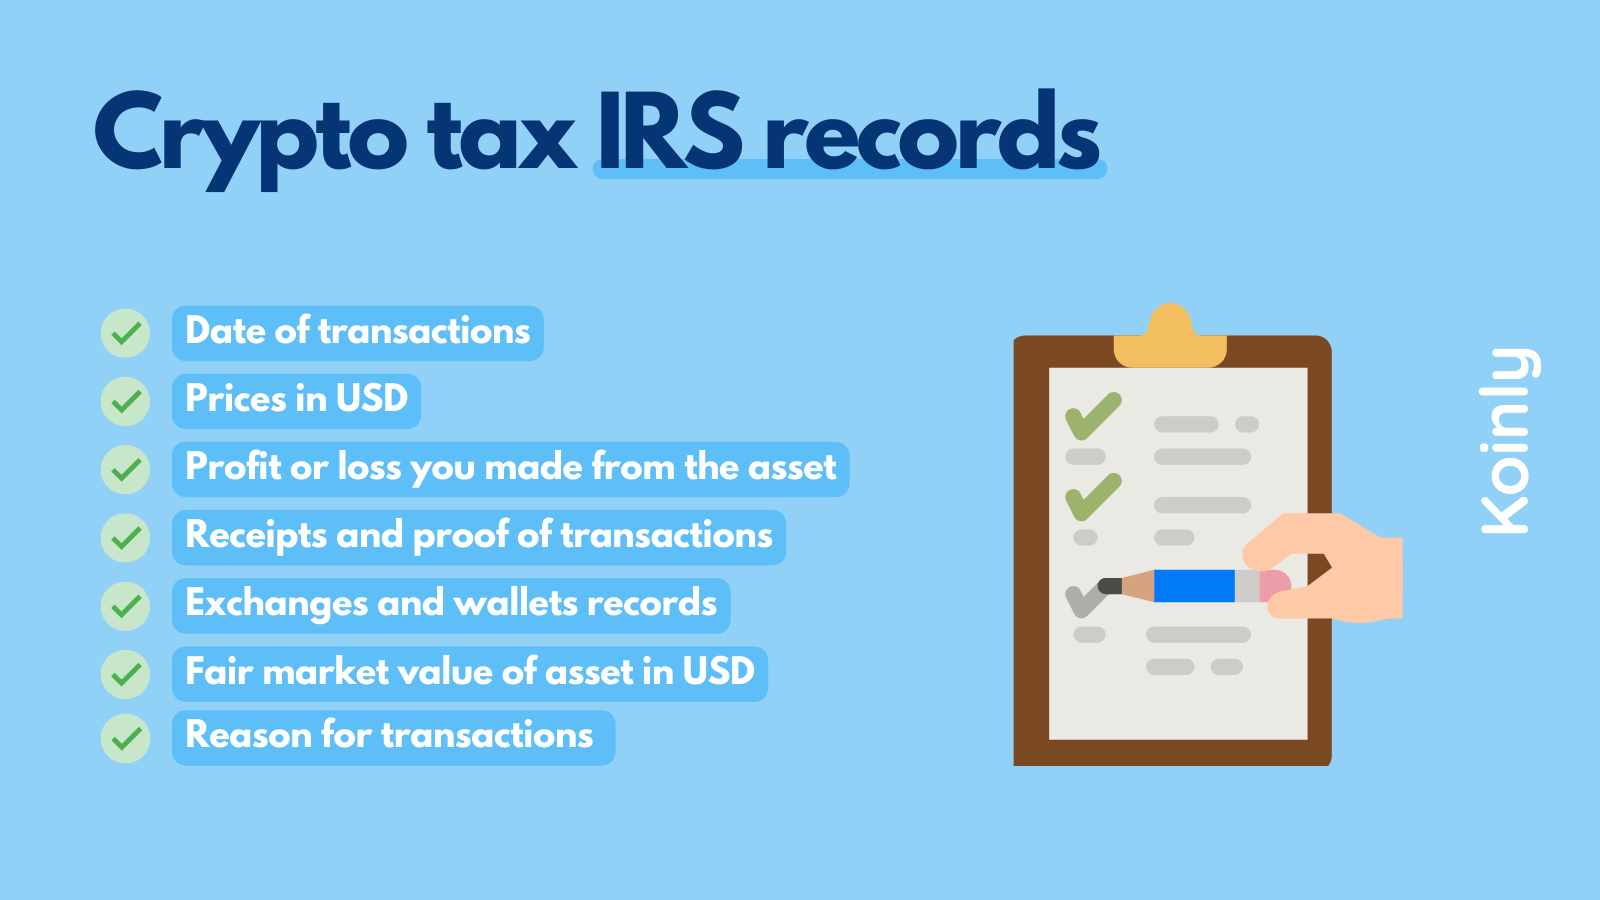 IRS records